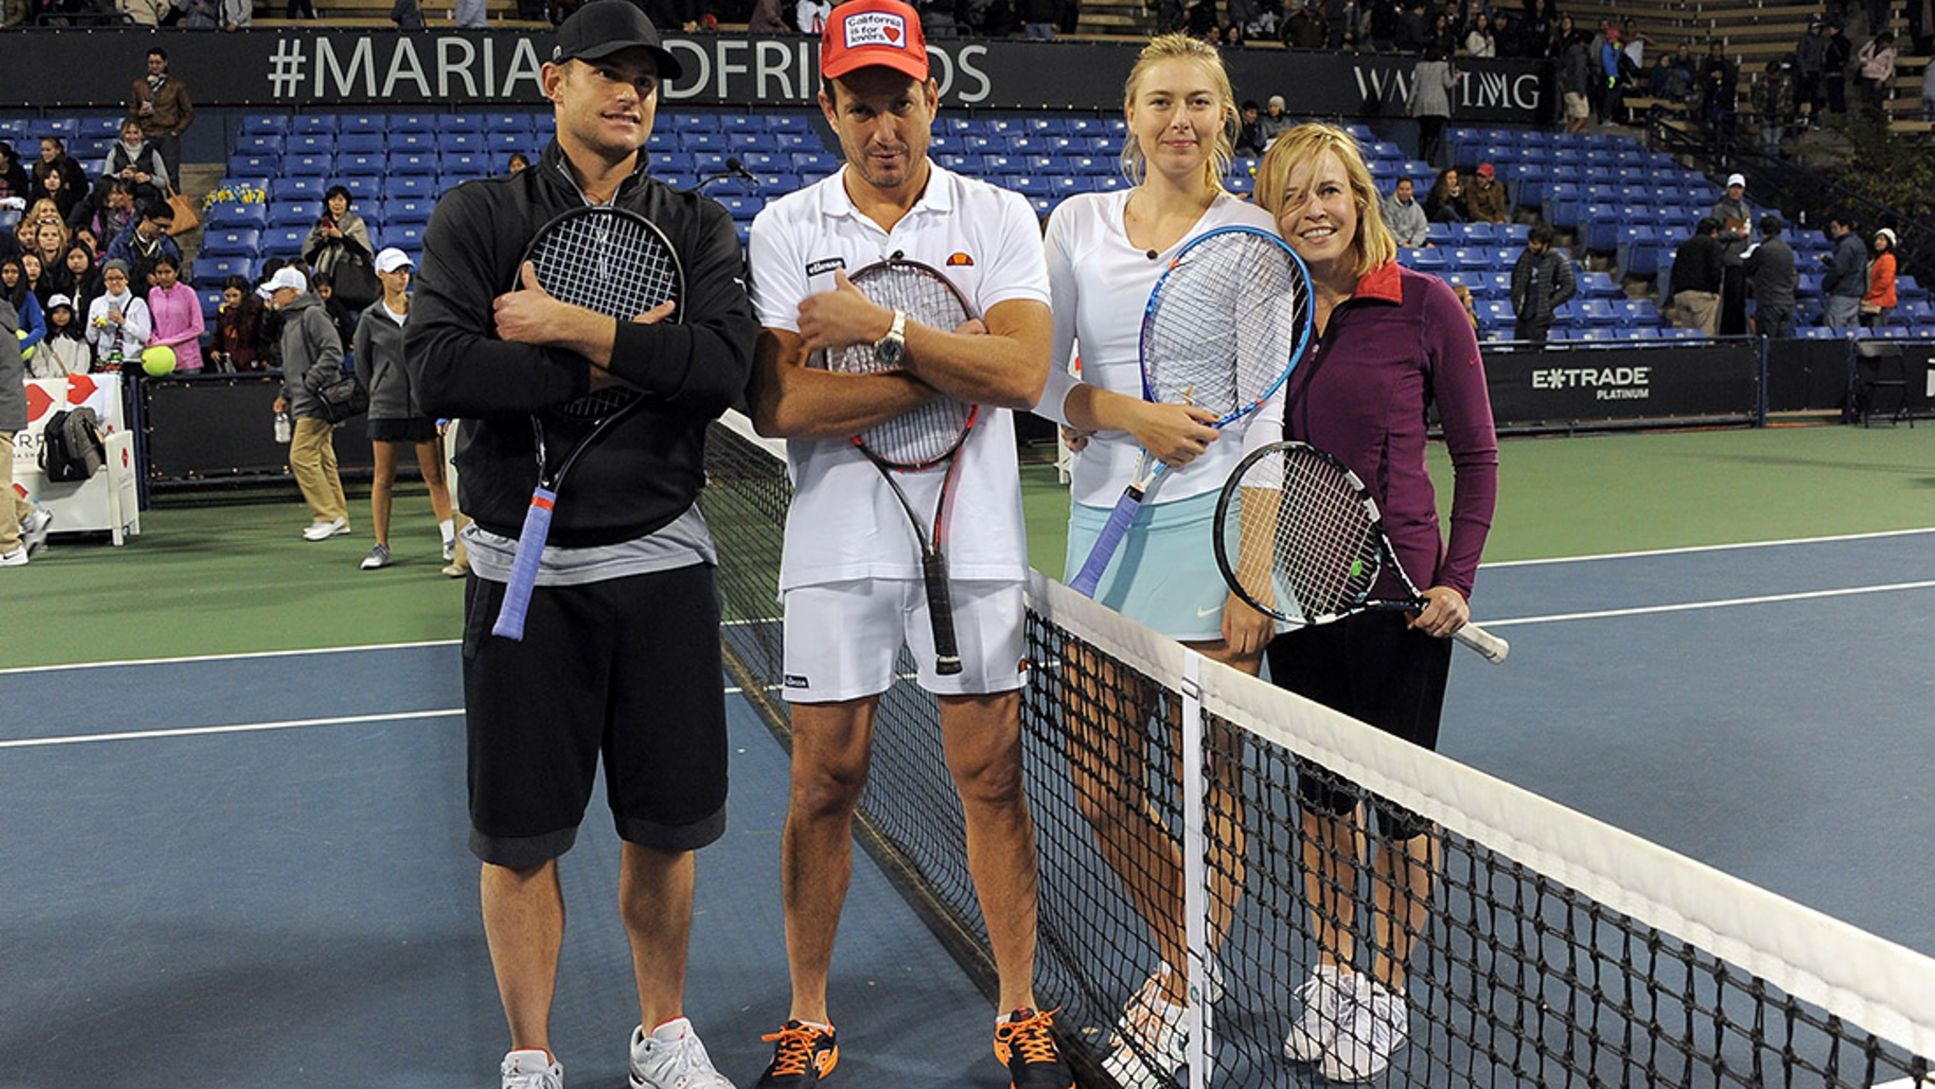 l-r Andy Roddick (USA), Will Arnett (Canada), Maria Sharapova, Chelsea Handler (USA), Maria Sharapova & Friends, Los Angeles, 2015, Porsche AG